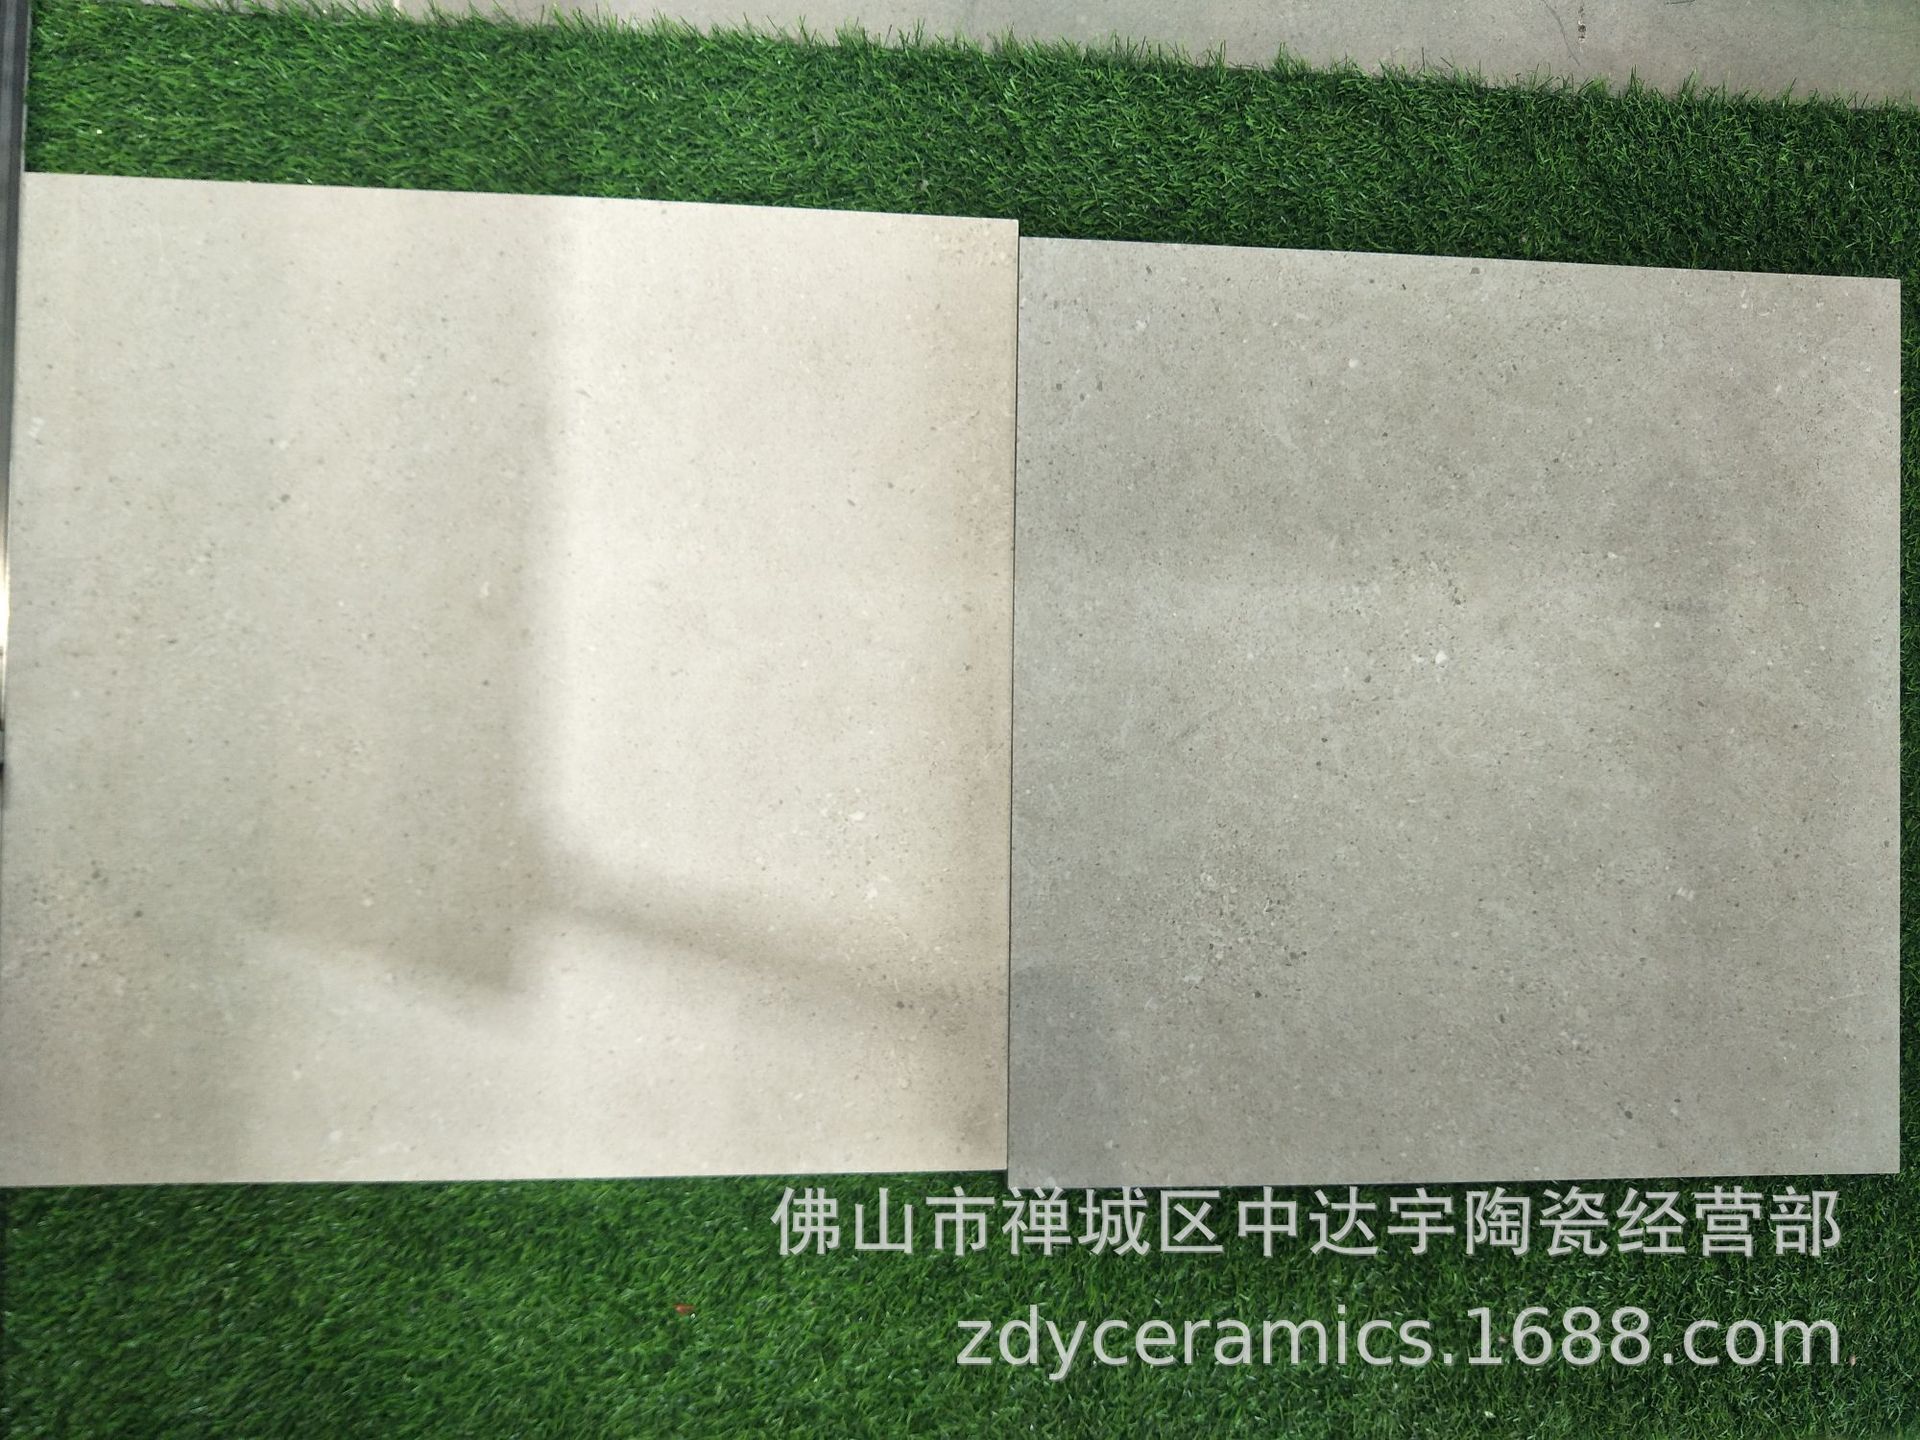 2cm加厚仿古背景墙600x600mm瓷砖防水客厅厨房浴室地面上墙地面砖示例图9